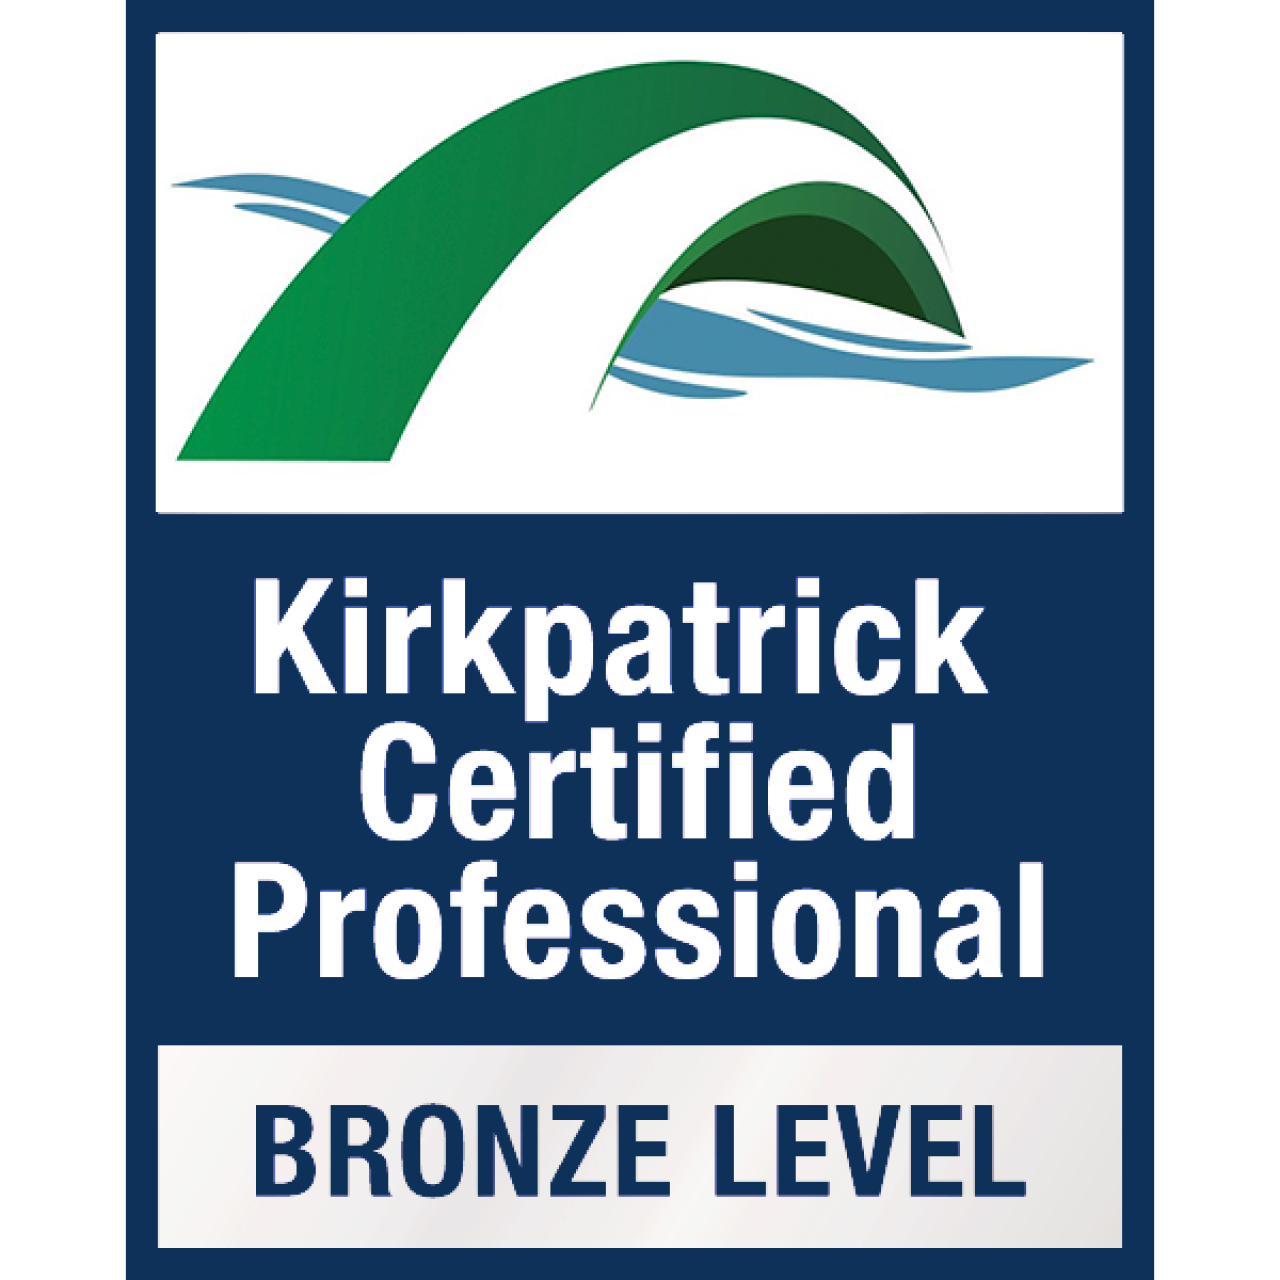 Kirkpatrick Certified Professional BRONZE LEVEL.